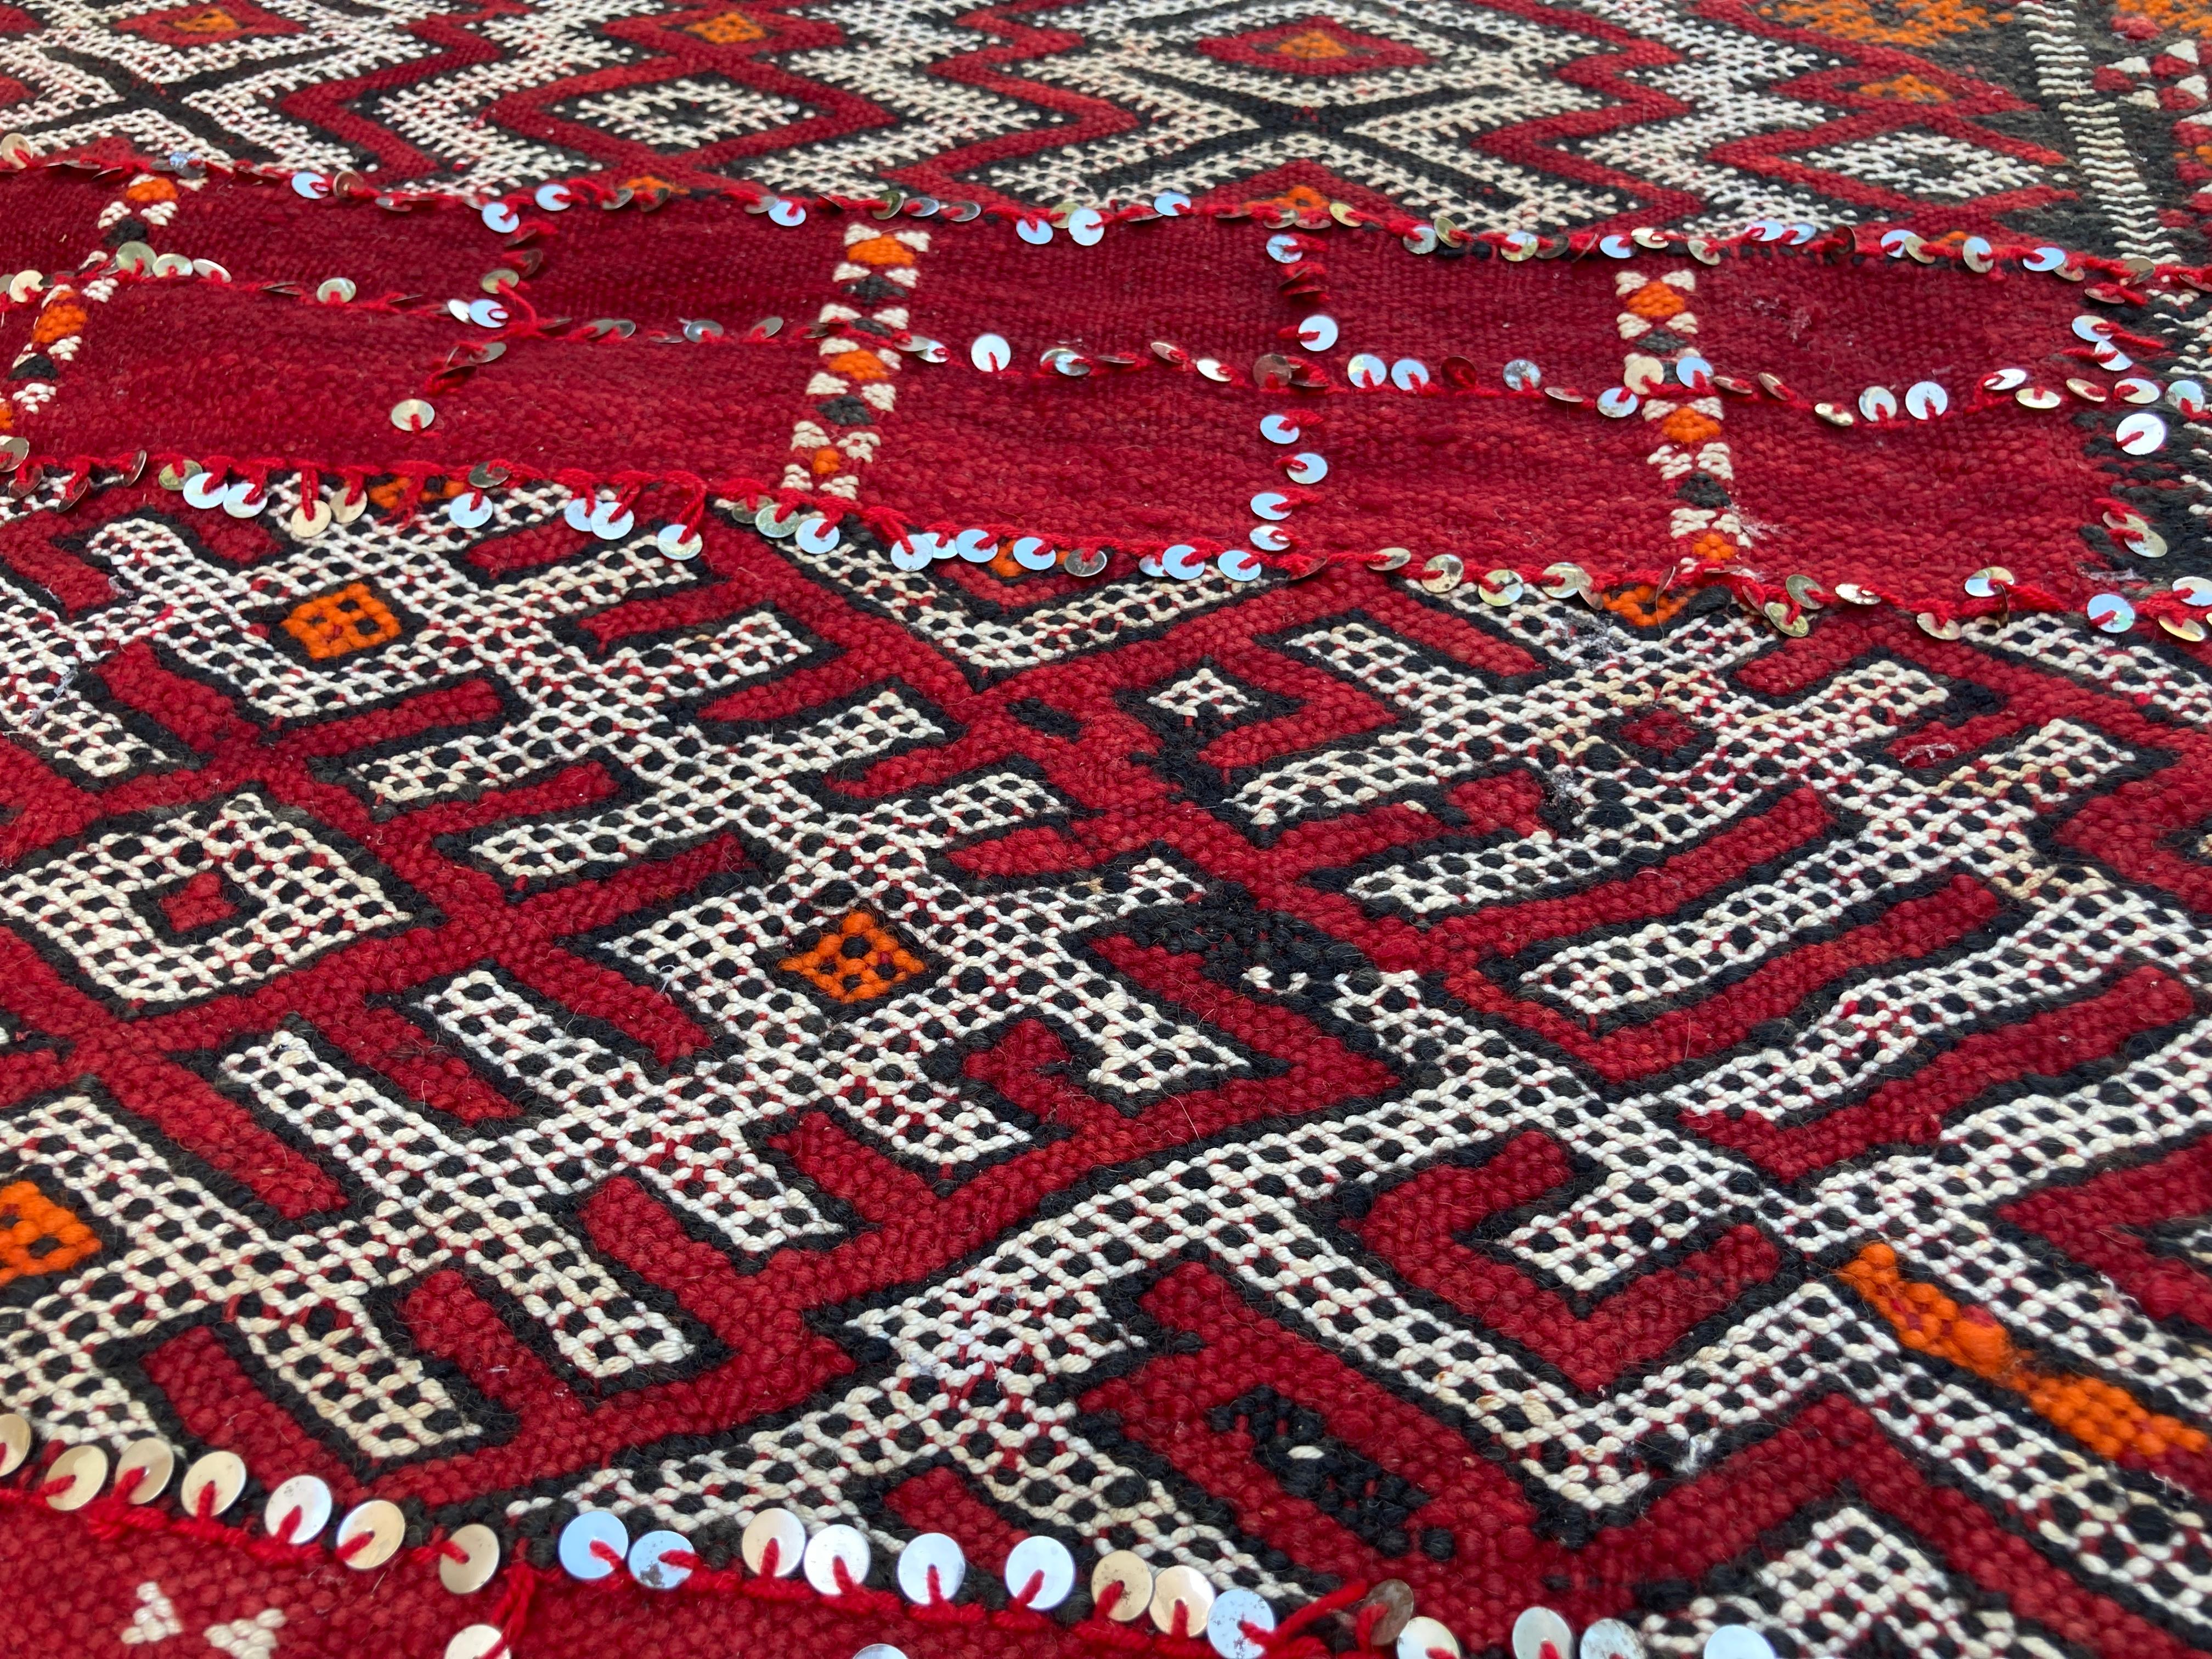 Moroccan Vintage Ethnic Textile with Sequins North Africa, Handira 2